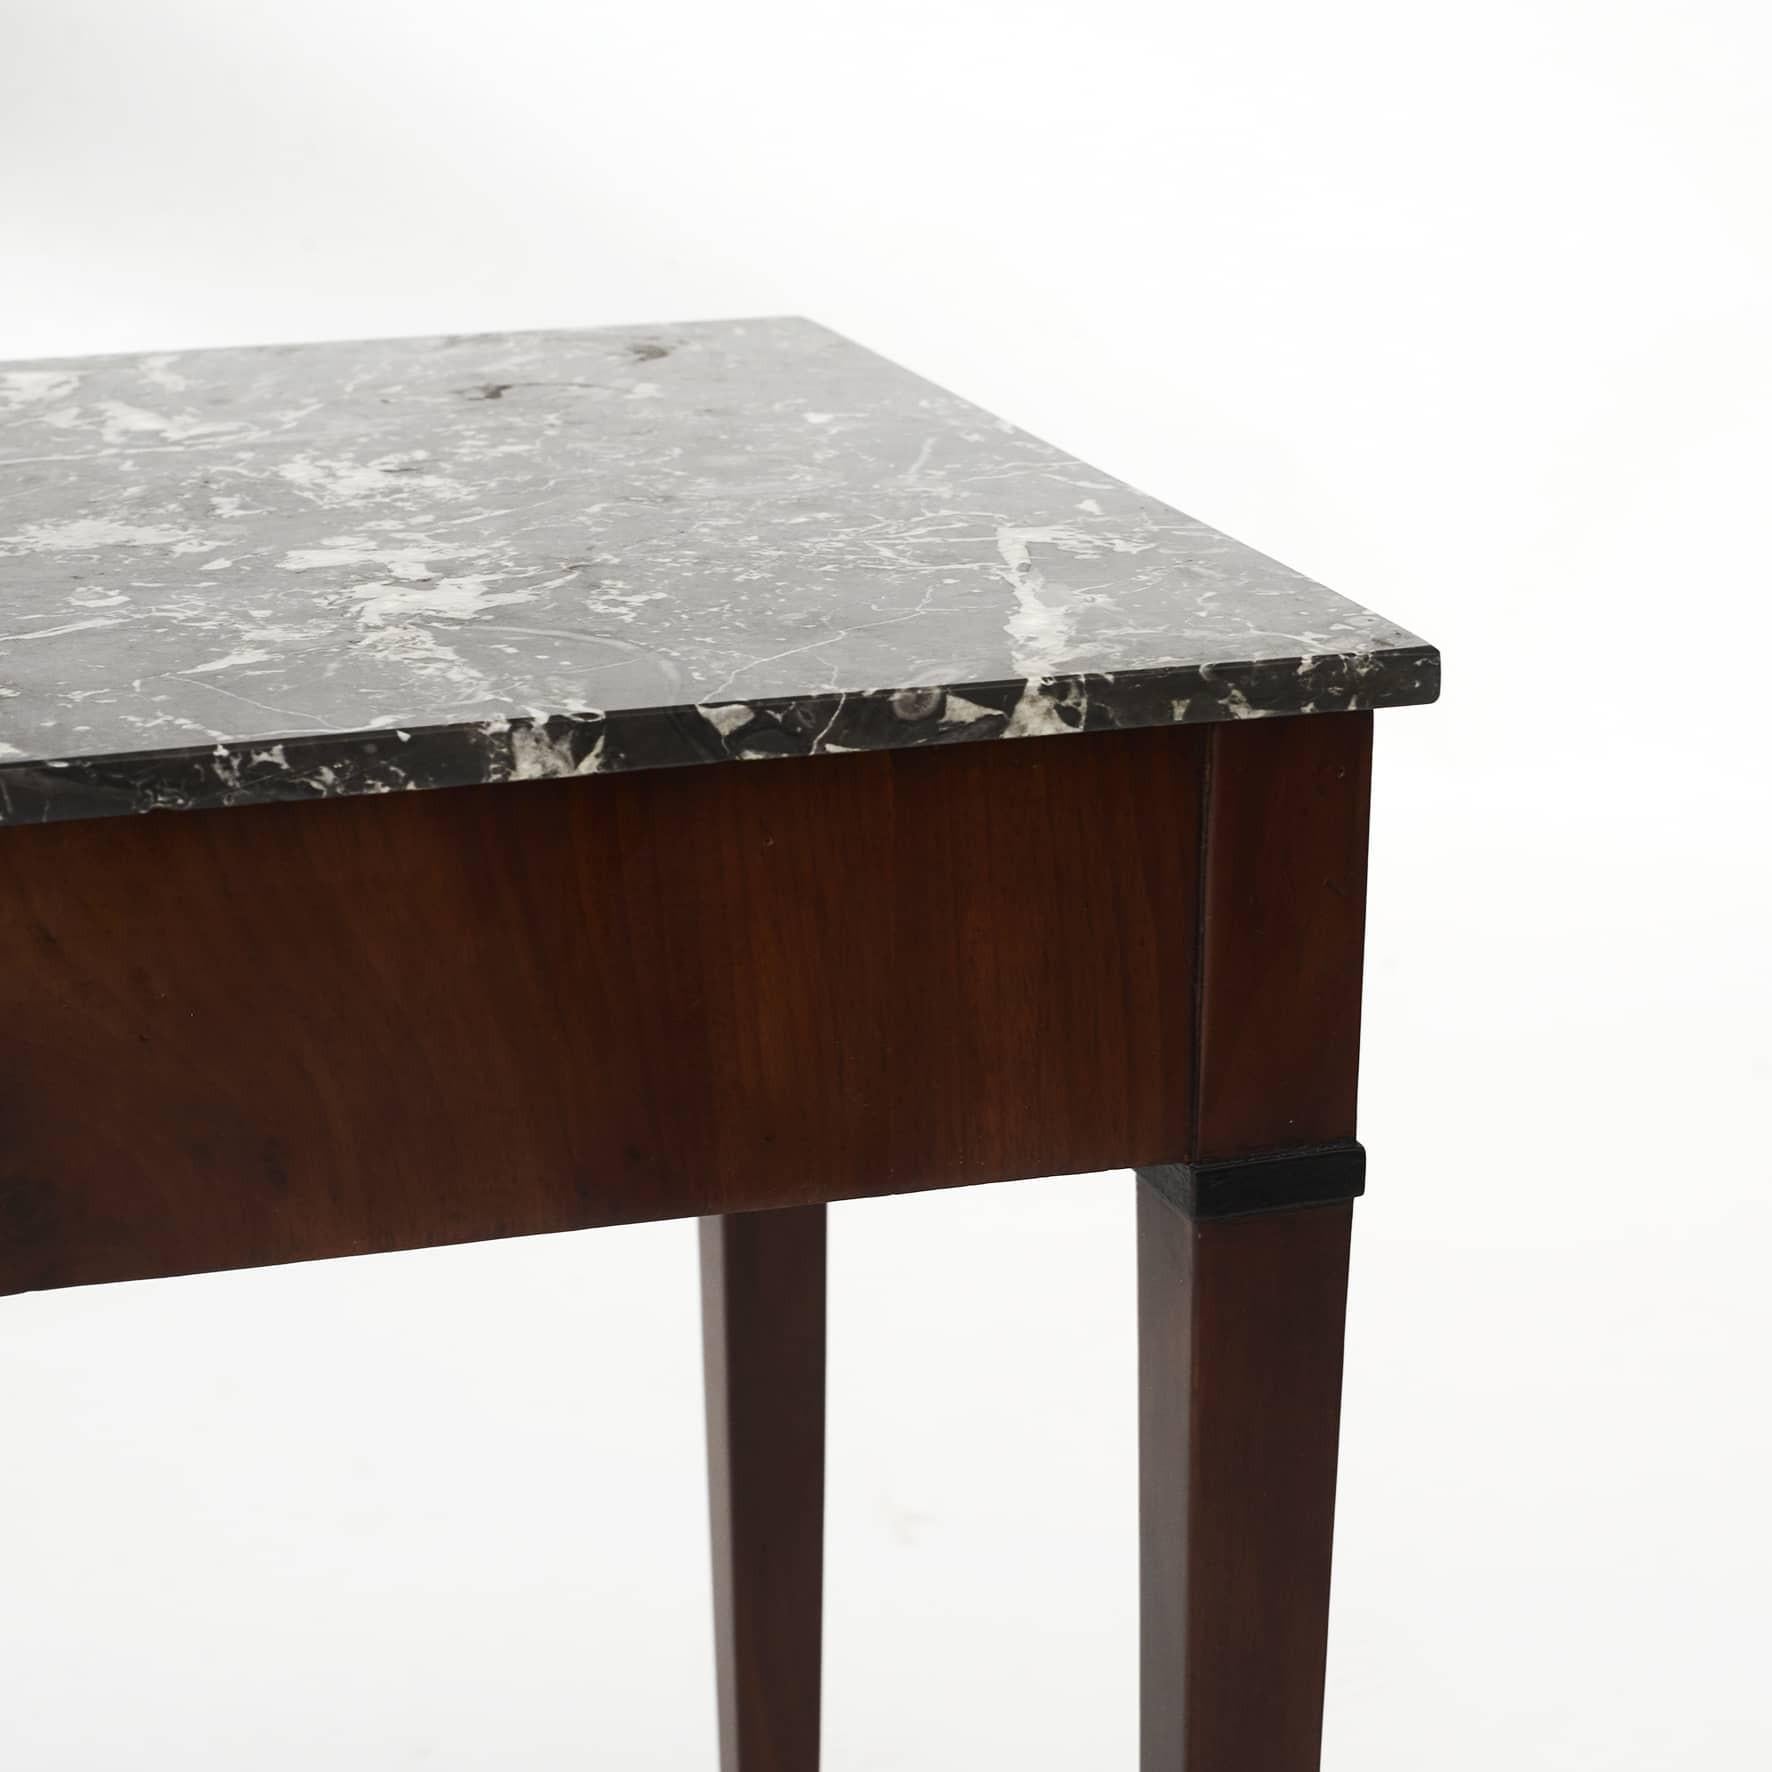 Elegant Danish Empire side table in mahogany.
Table top in Belgian gray marble.
Elegant inlay of dark hardwood on legs.

Copenhagen approx. 1810.